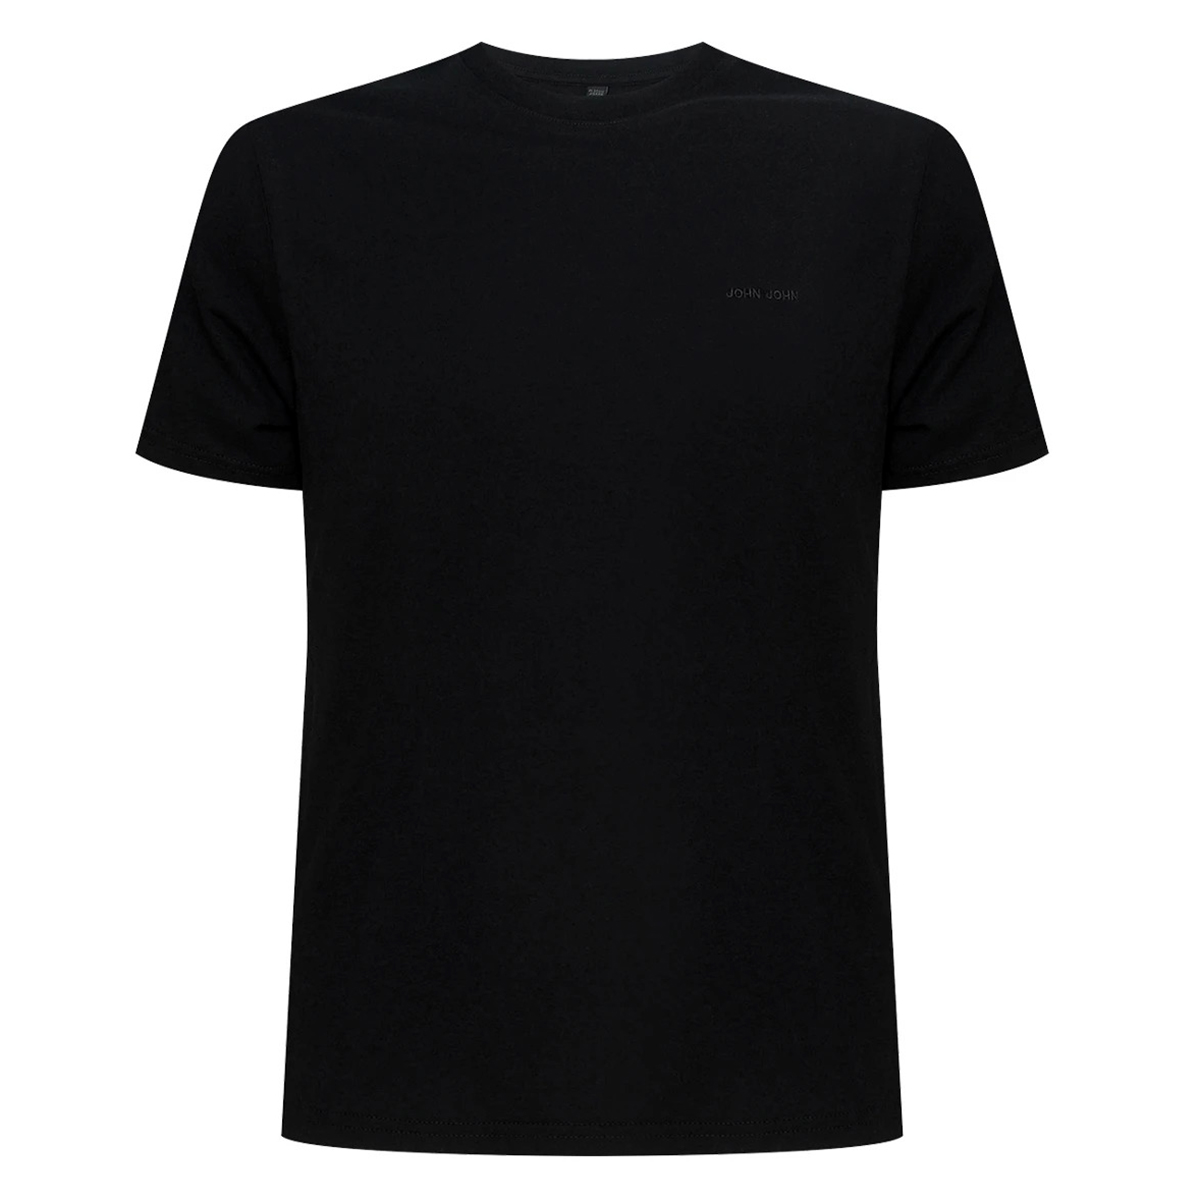 T-Shirt Masculina Rx Doberman - John John - Preto - Shop2gether